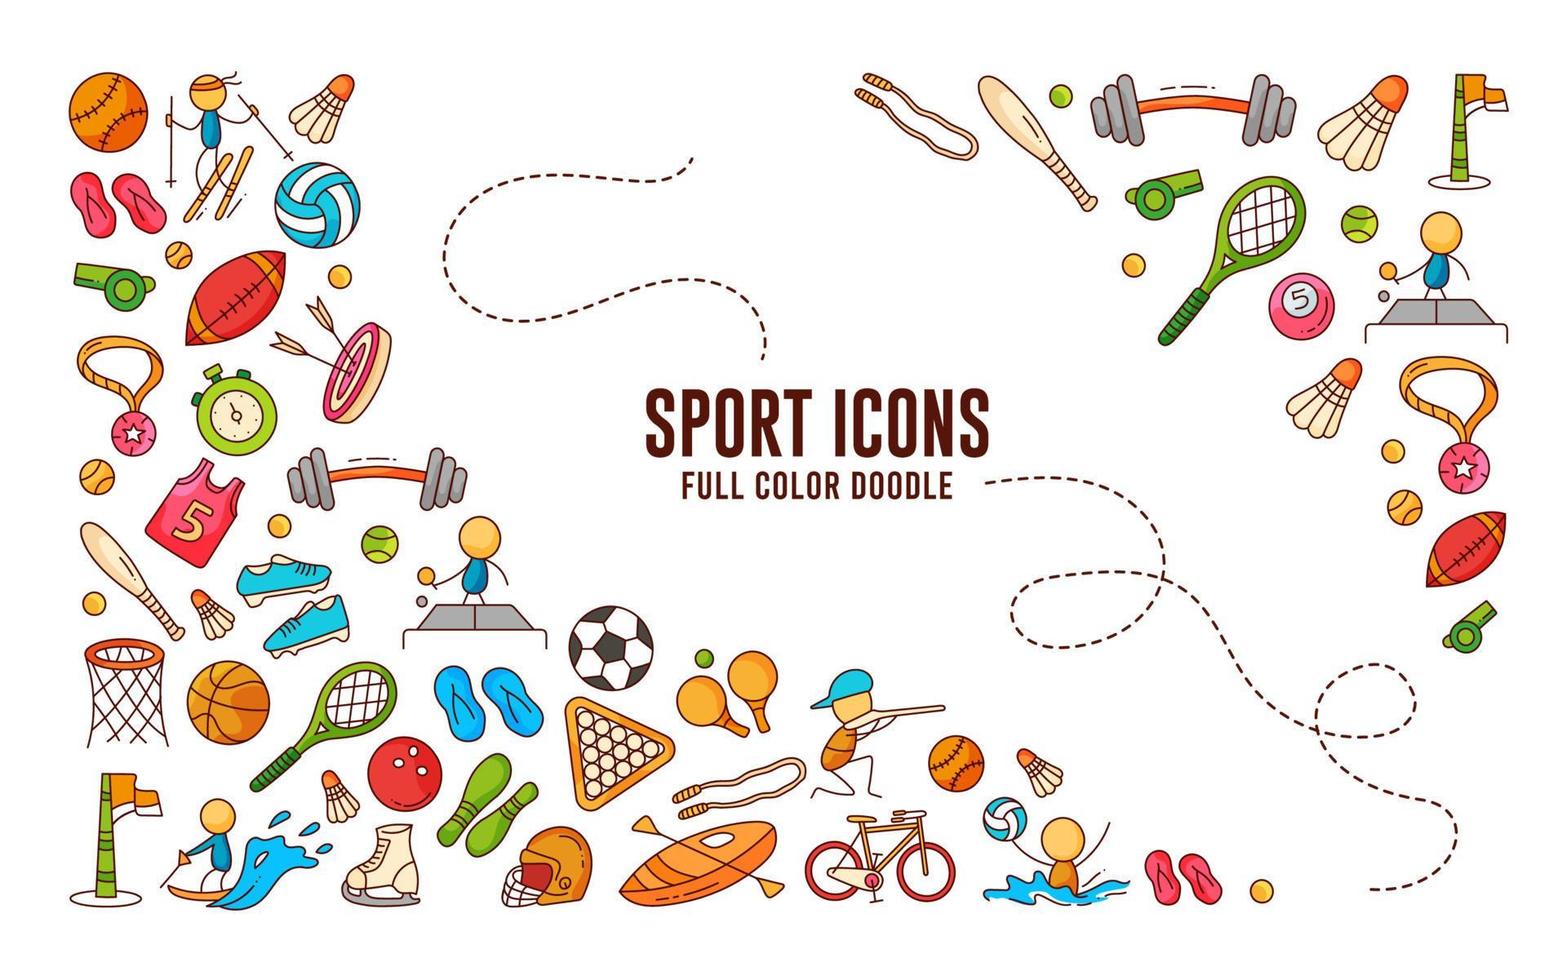 elemento de doodle de esporte, doodle de padrão de esporte, doodle de desenho de mão, conjunto de ícones de esporte, contorno preenchido com cores vetor